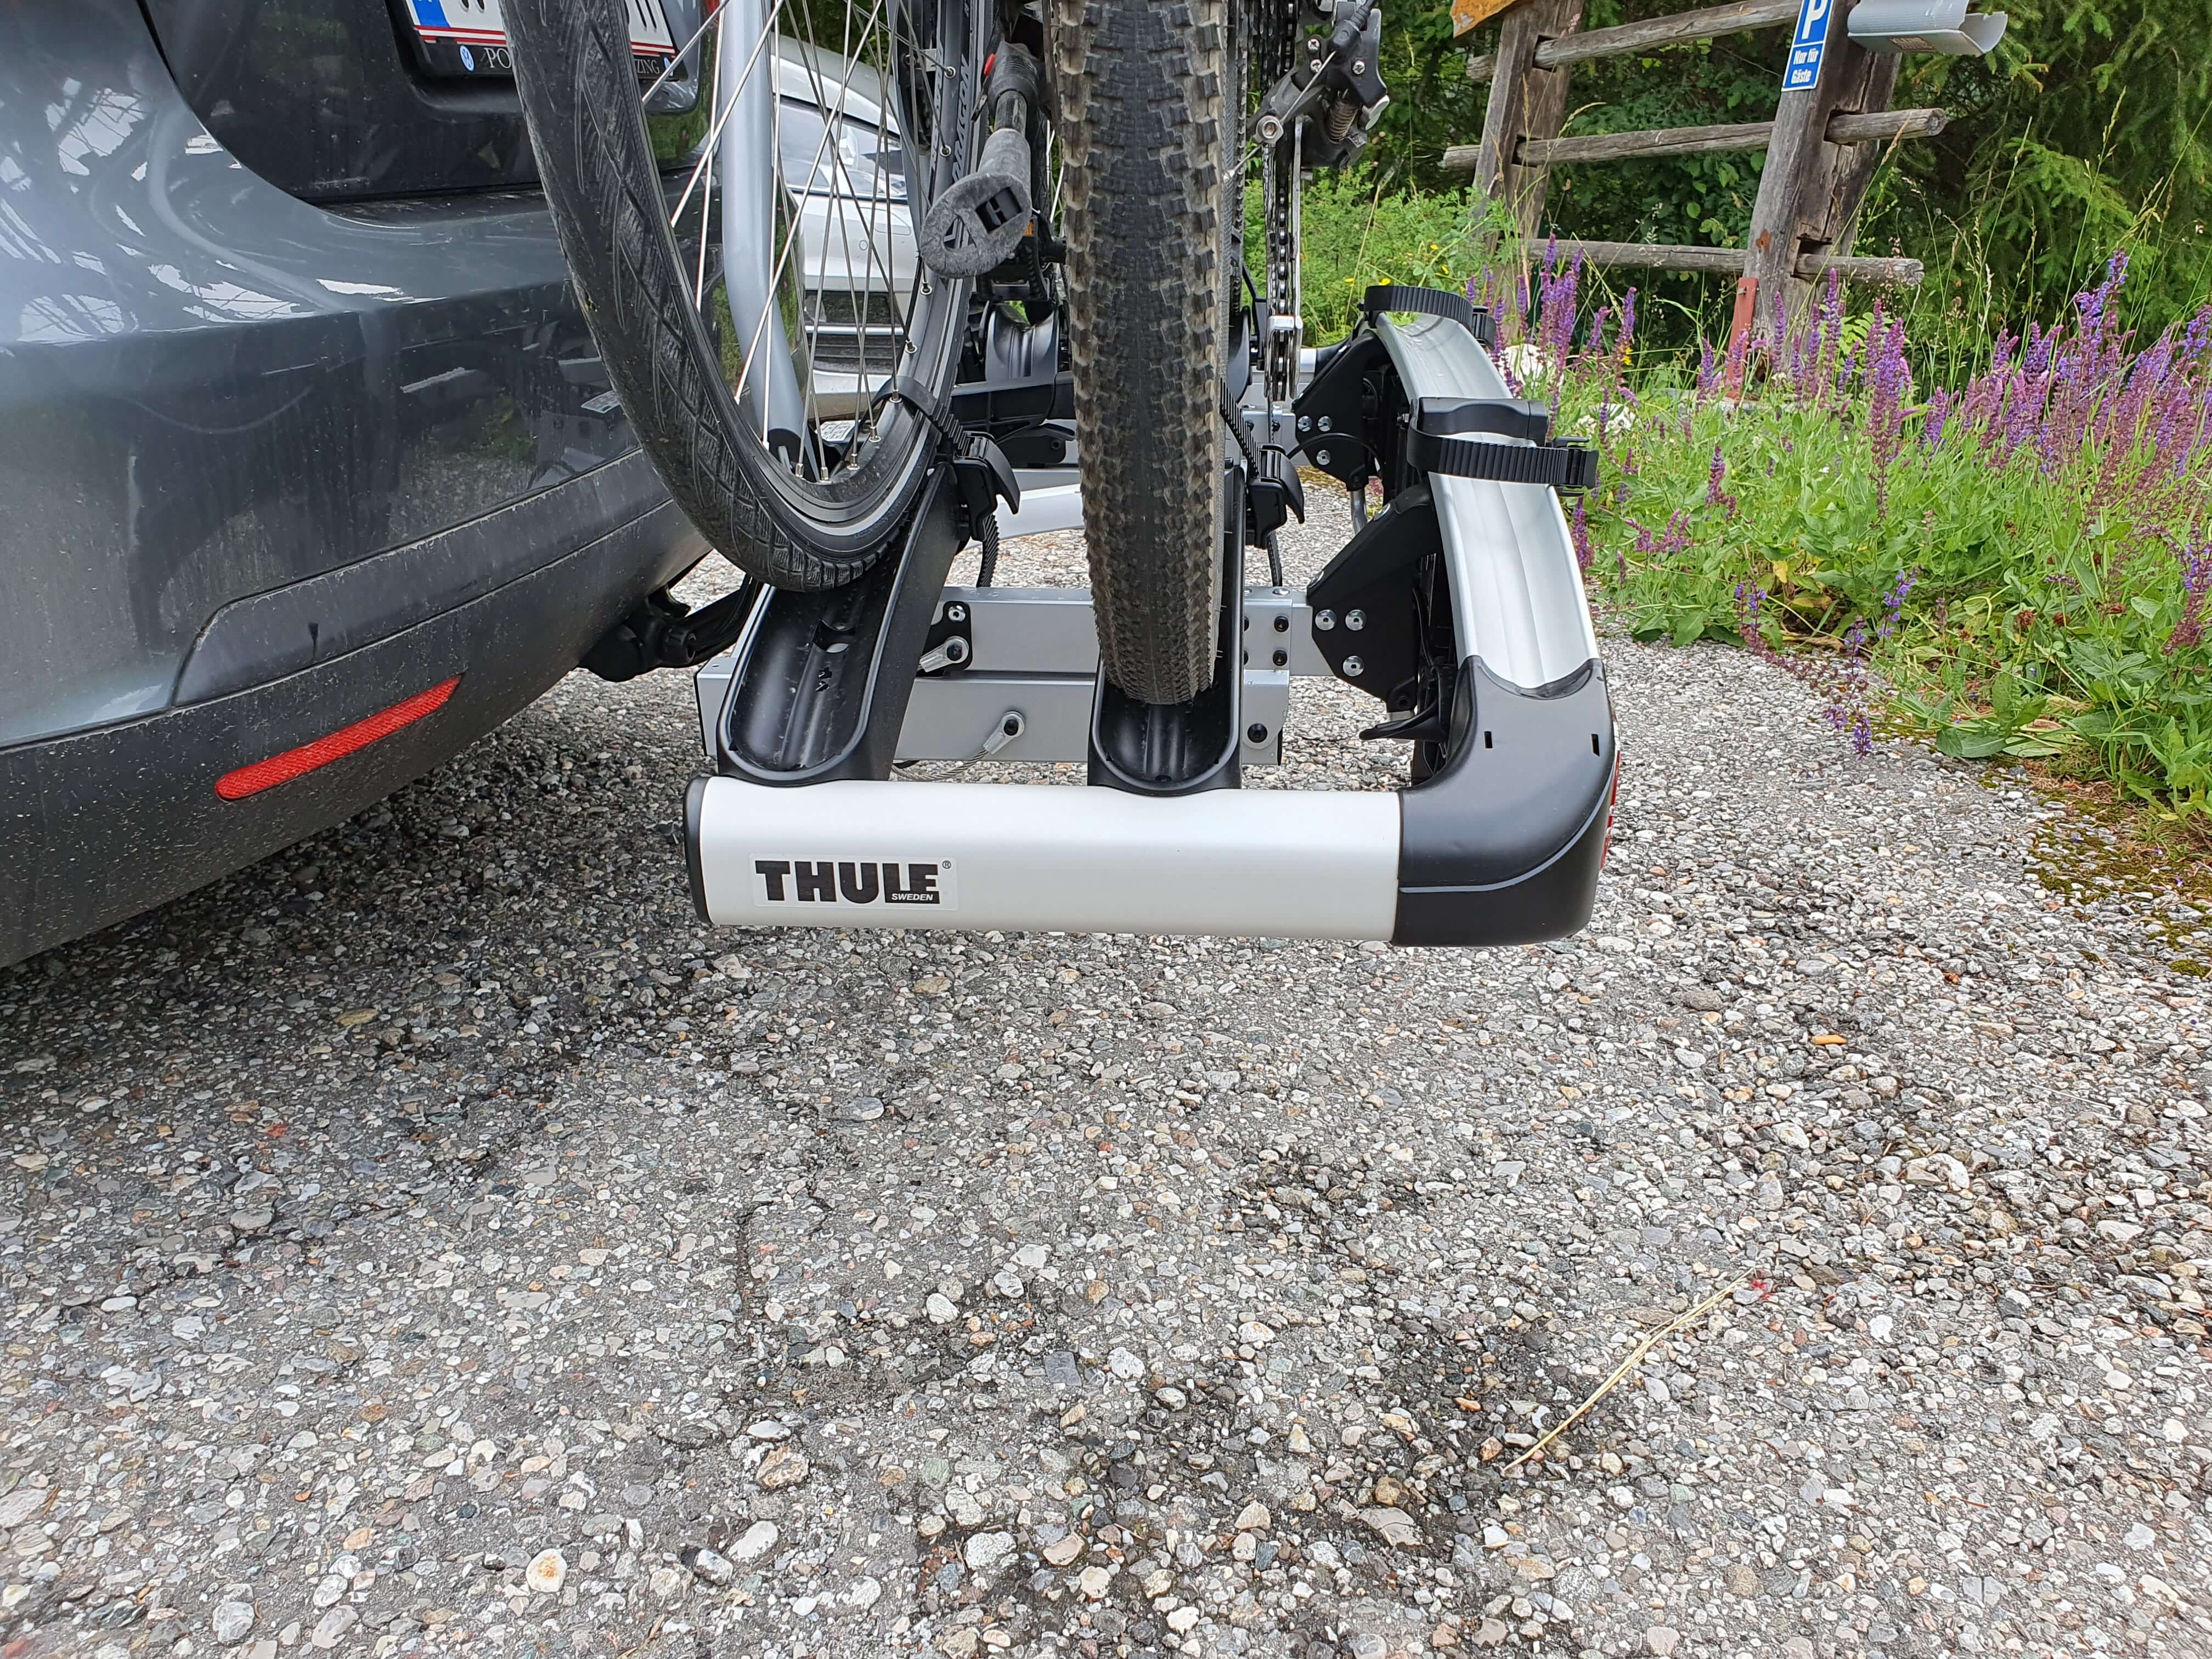 Thule Fahrradträger (3 Räder) für Anhängerkupplung - 7c8528c5-31dd-4d23-84bc-1c39d18fac7b